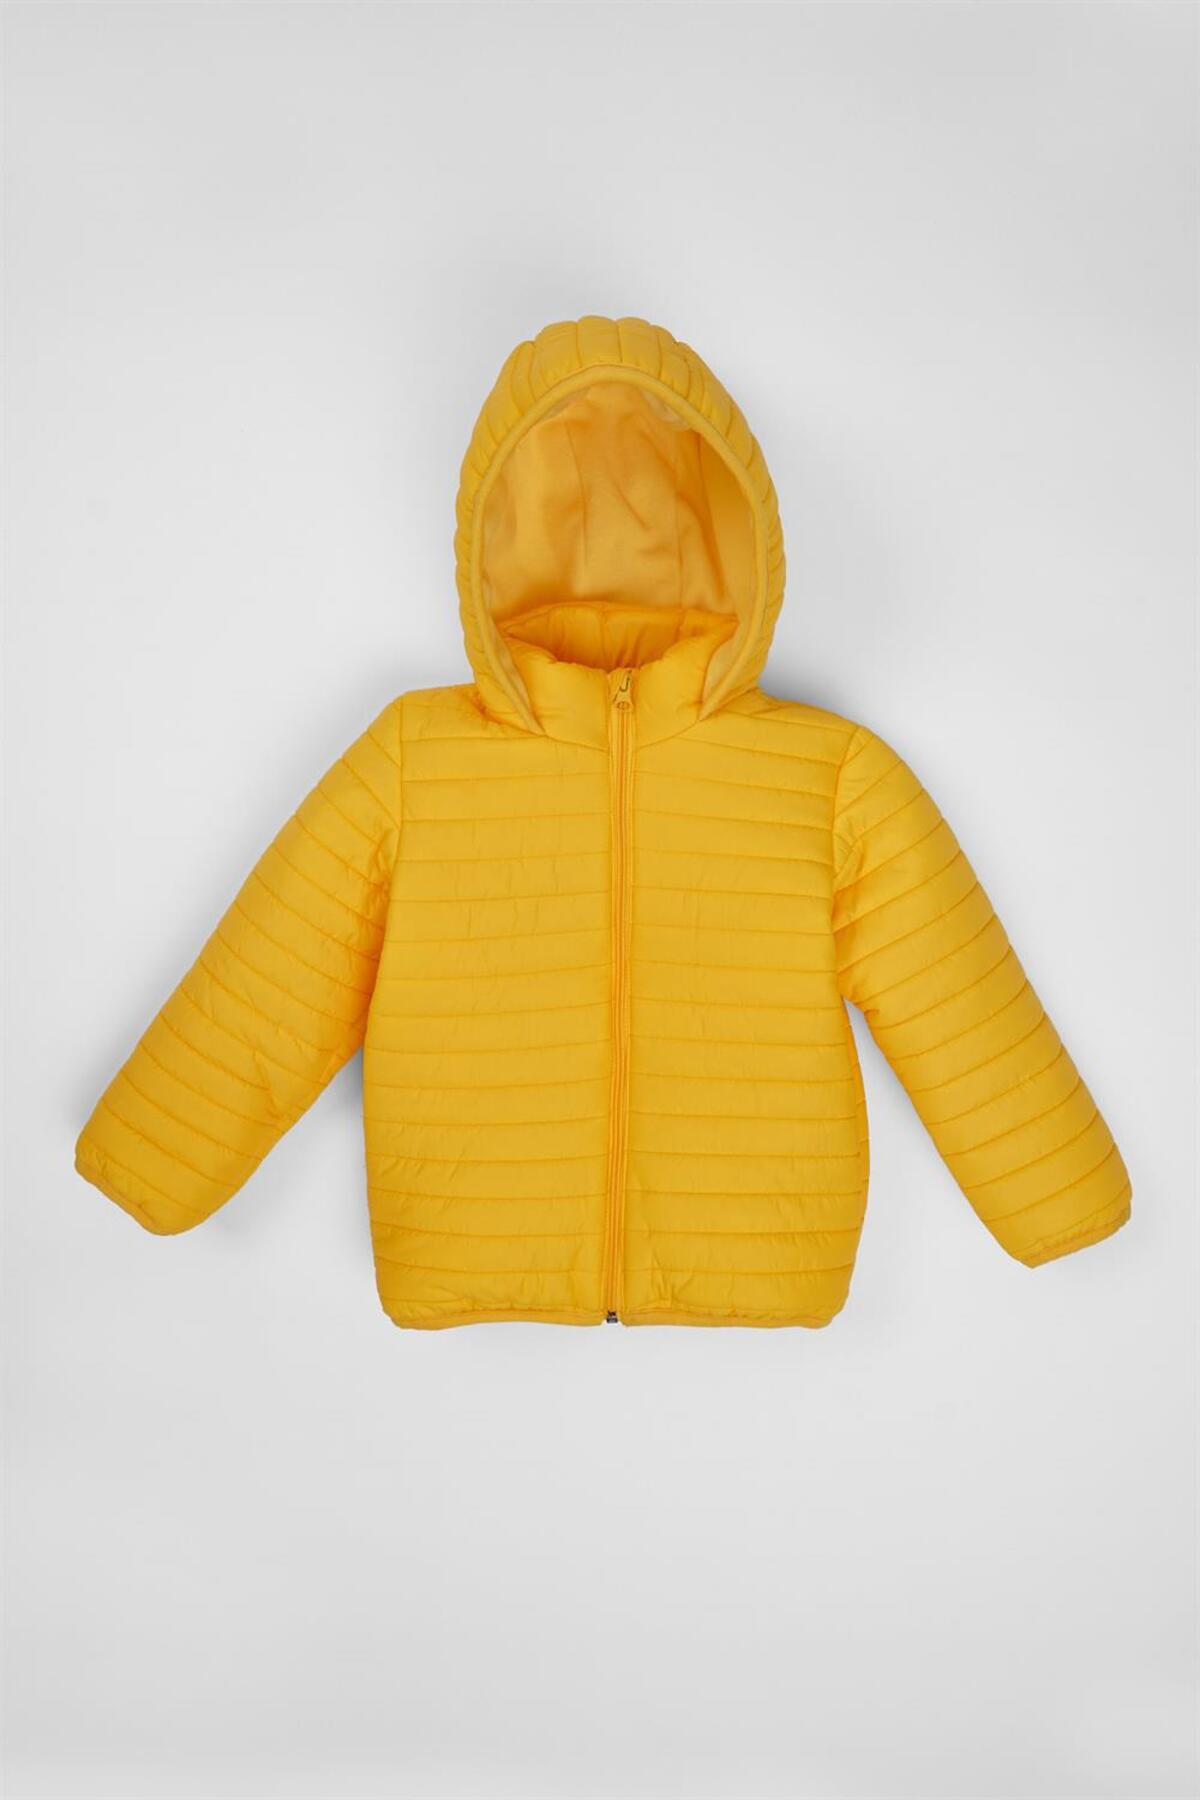 Levně zepkids Boys' Yellow Color Fleece Hooded Coat.